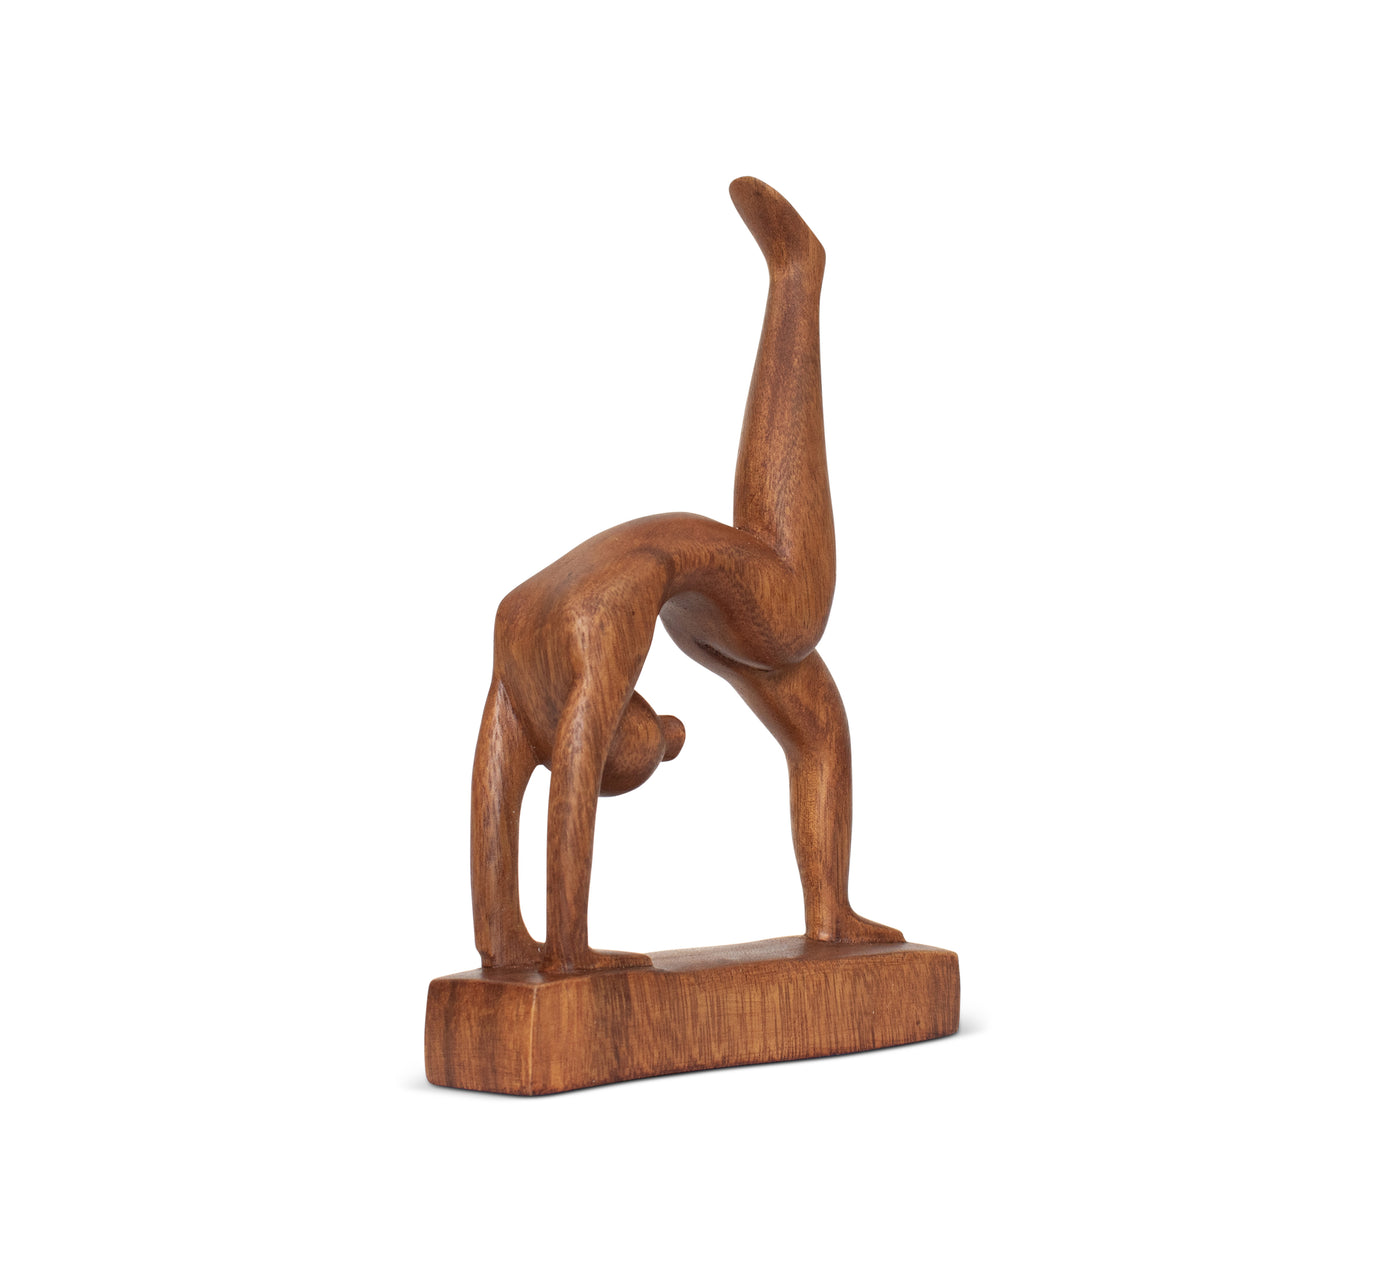 8" Wooden Handmade Mini Yoga Figurines, Yoga Pose Statue, Yoga Room Studio Decor, Mindful Home Decor Yogi Gift, Decorative Shelf Decor Objects - One-Legged Wheel Pose - Heel Down